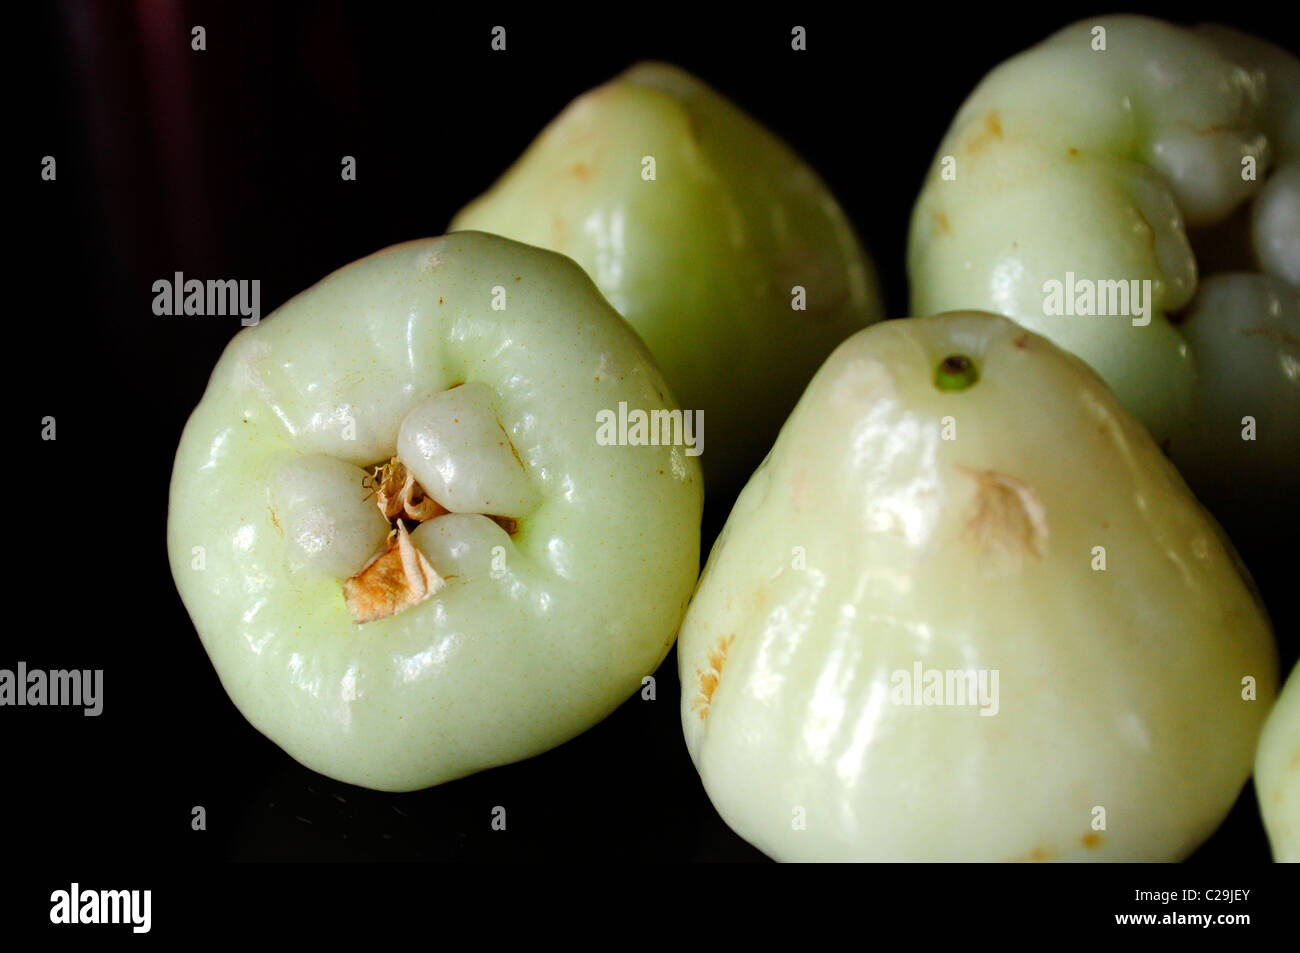 Water Apple, Wax Jambu, Botanical name: Syzygium javanicum. Stock Photo